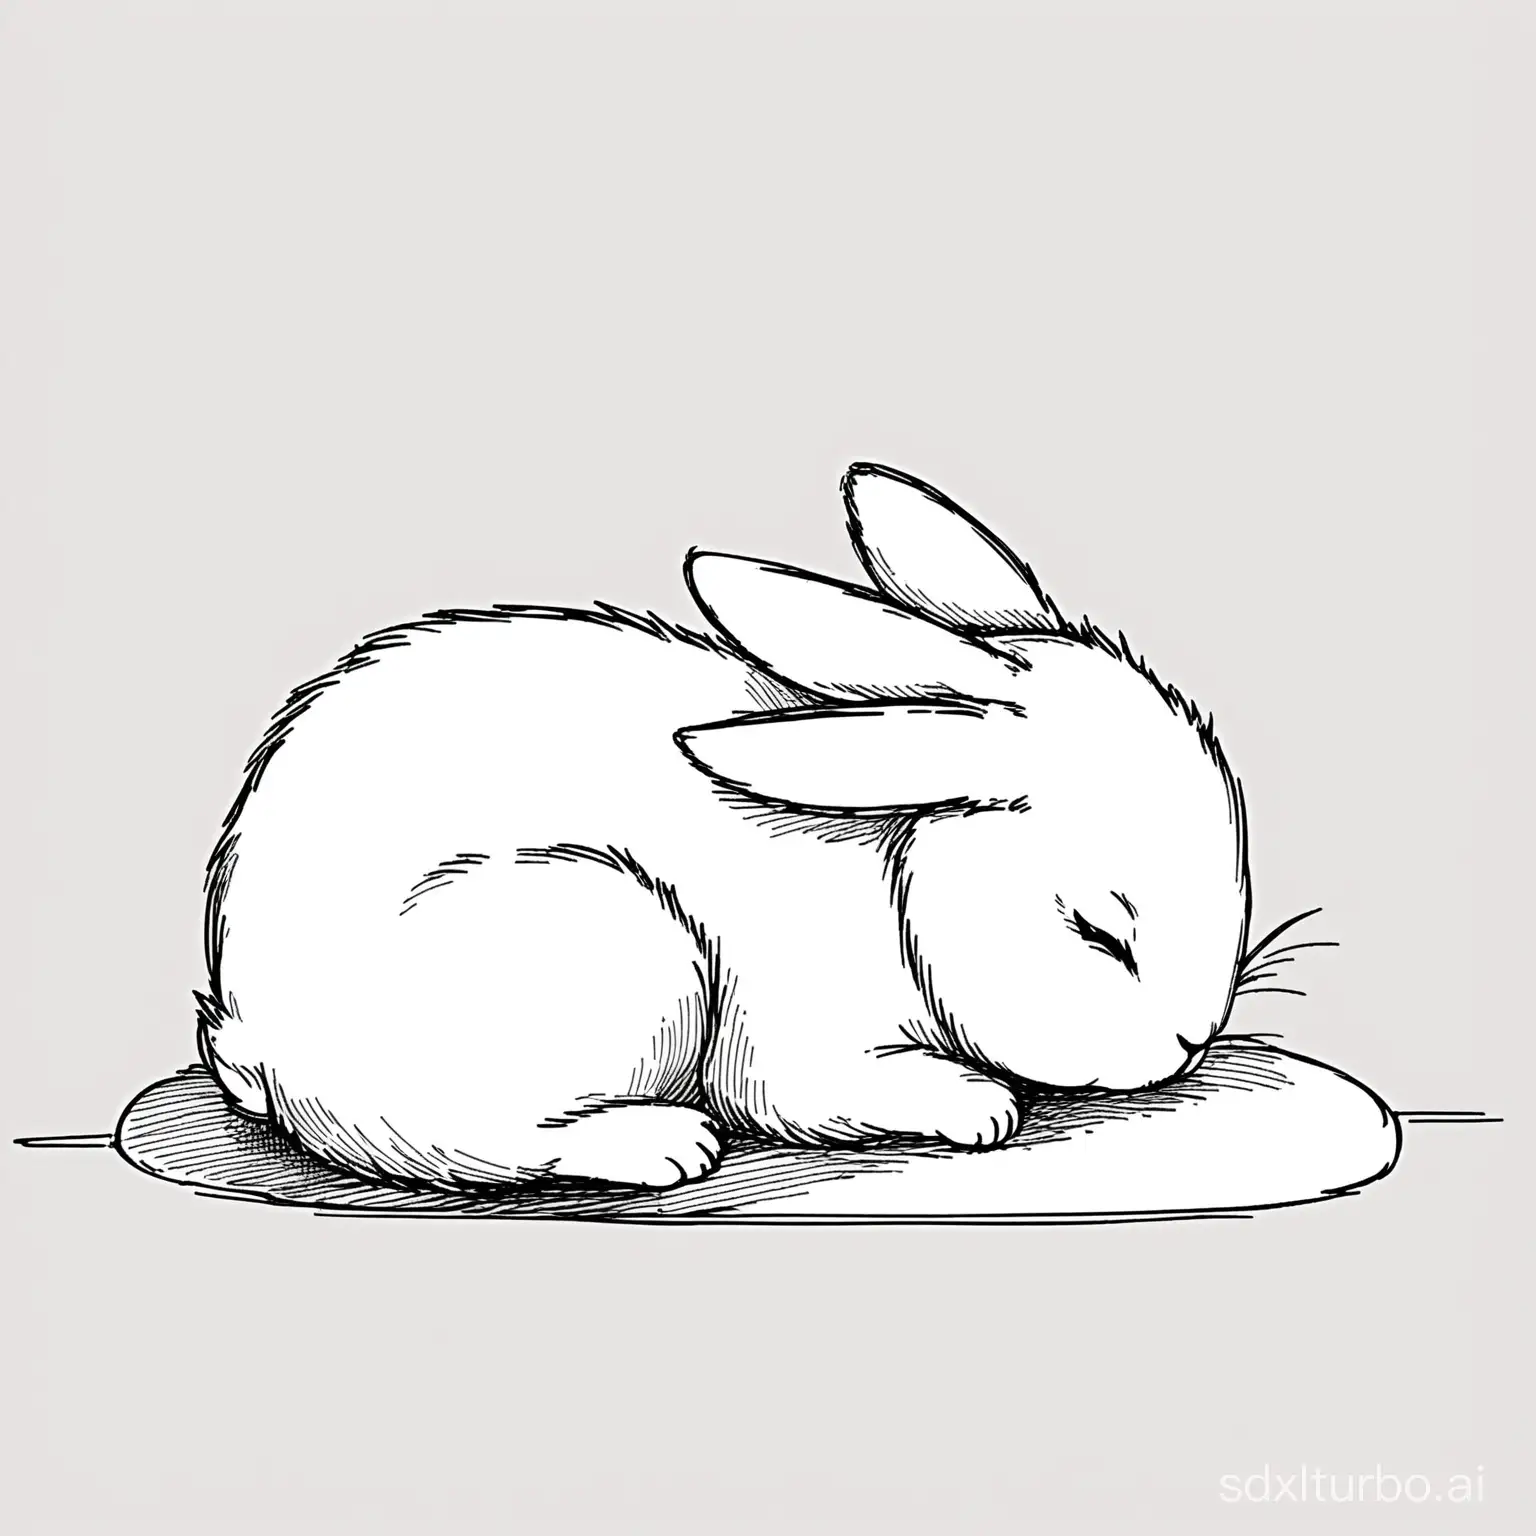 Black and white sketch line drawing, sleeping cartoon rabbit